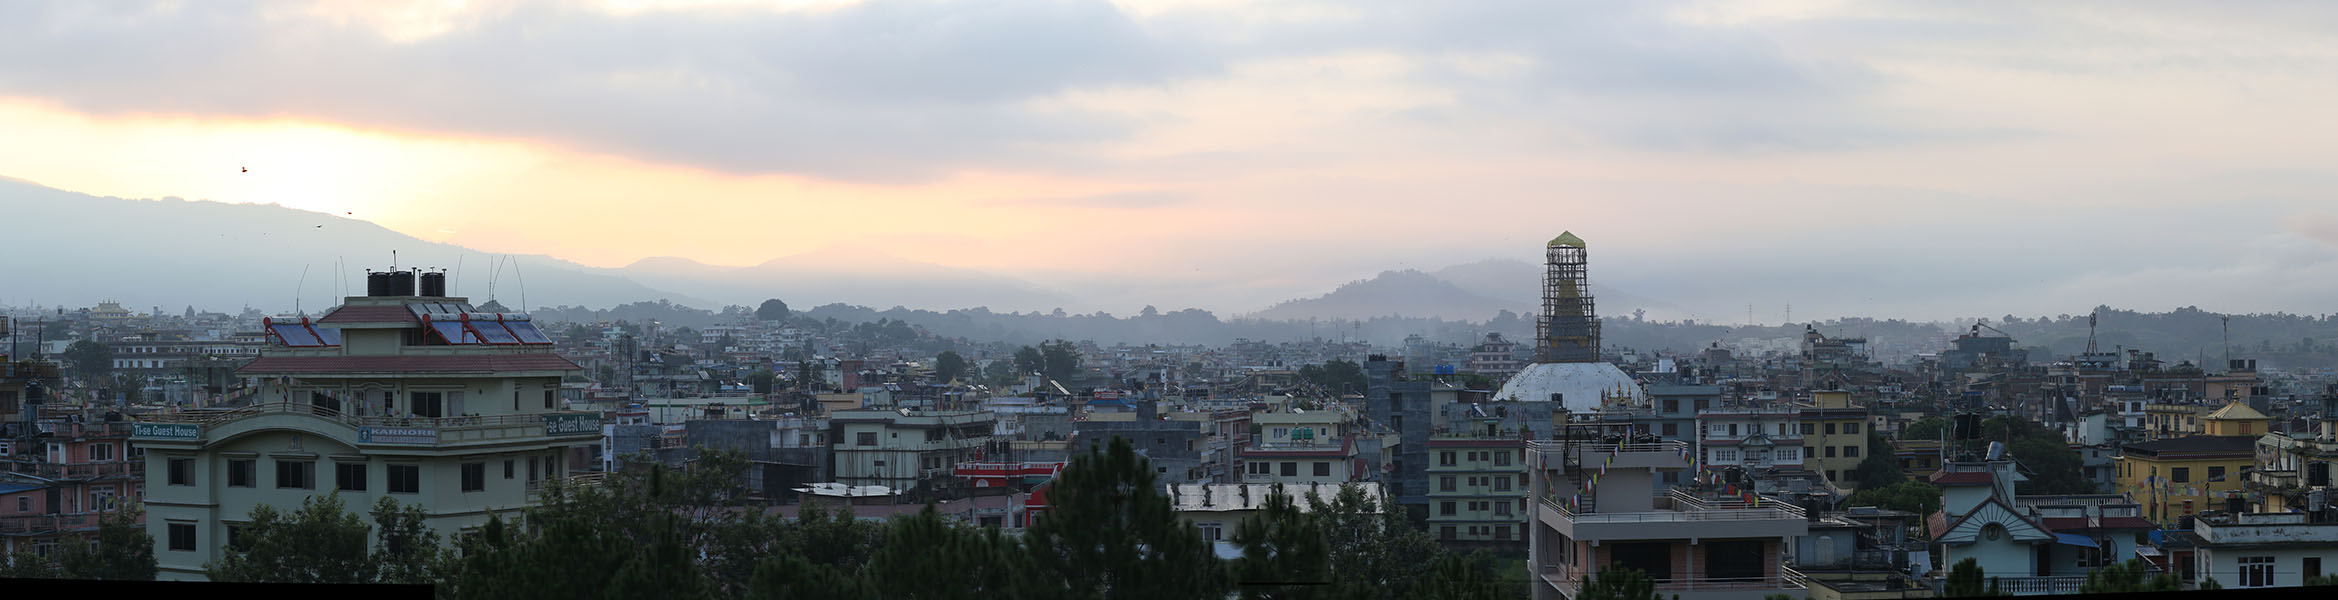 Panoramic View of Kathmandu Neighborhood with Large Stupa at Sunset.